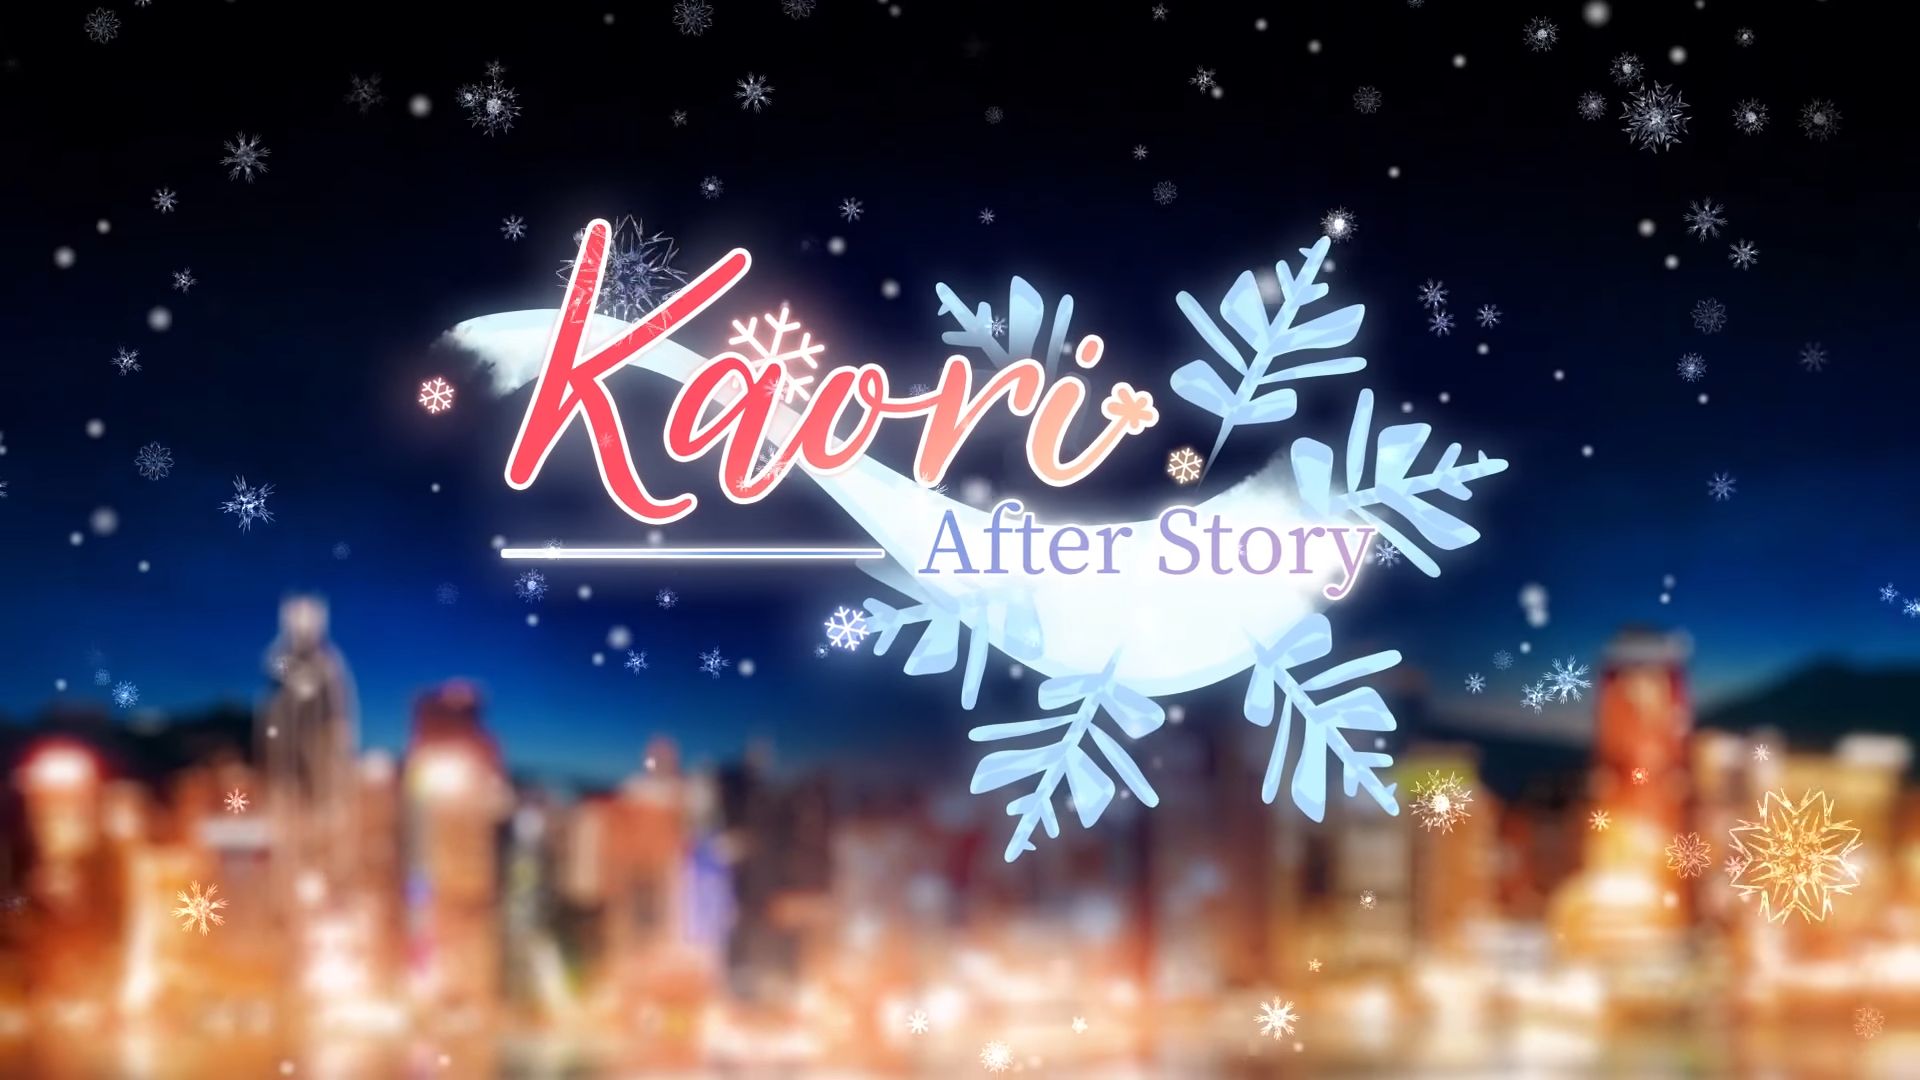 Download Kaori After Story für Android kostenlos.